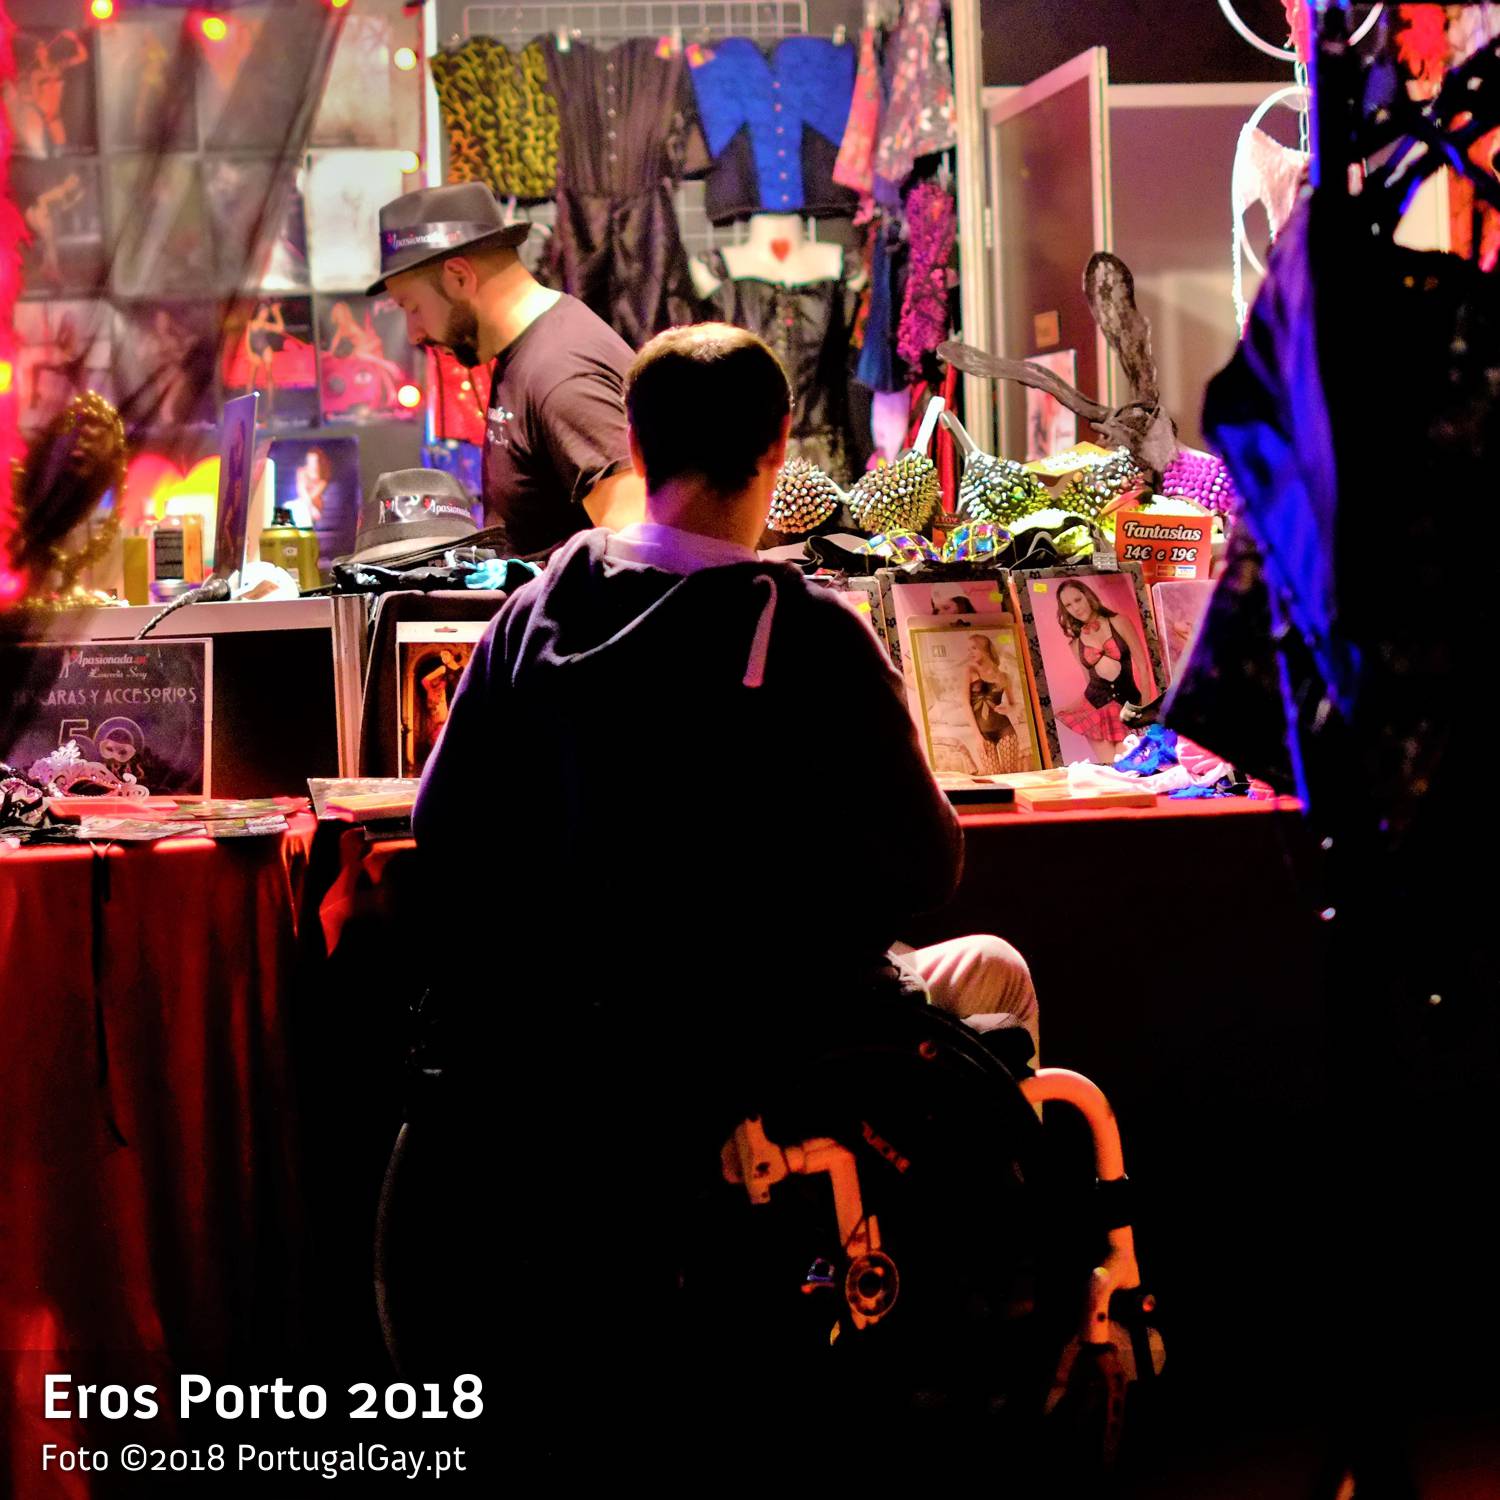 PORTUGAL: Eros Porto, sexo j foi tab